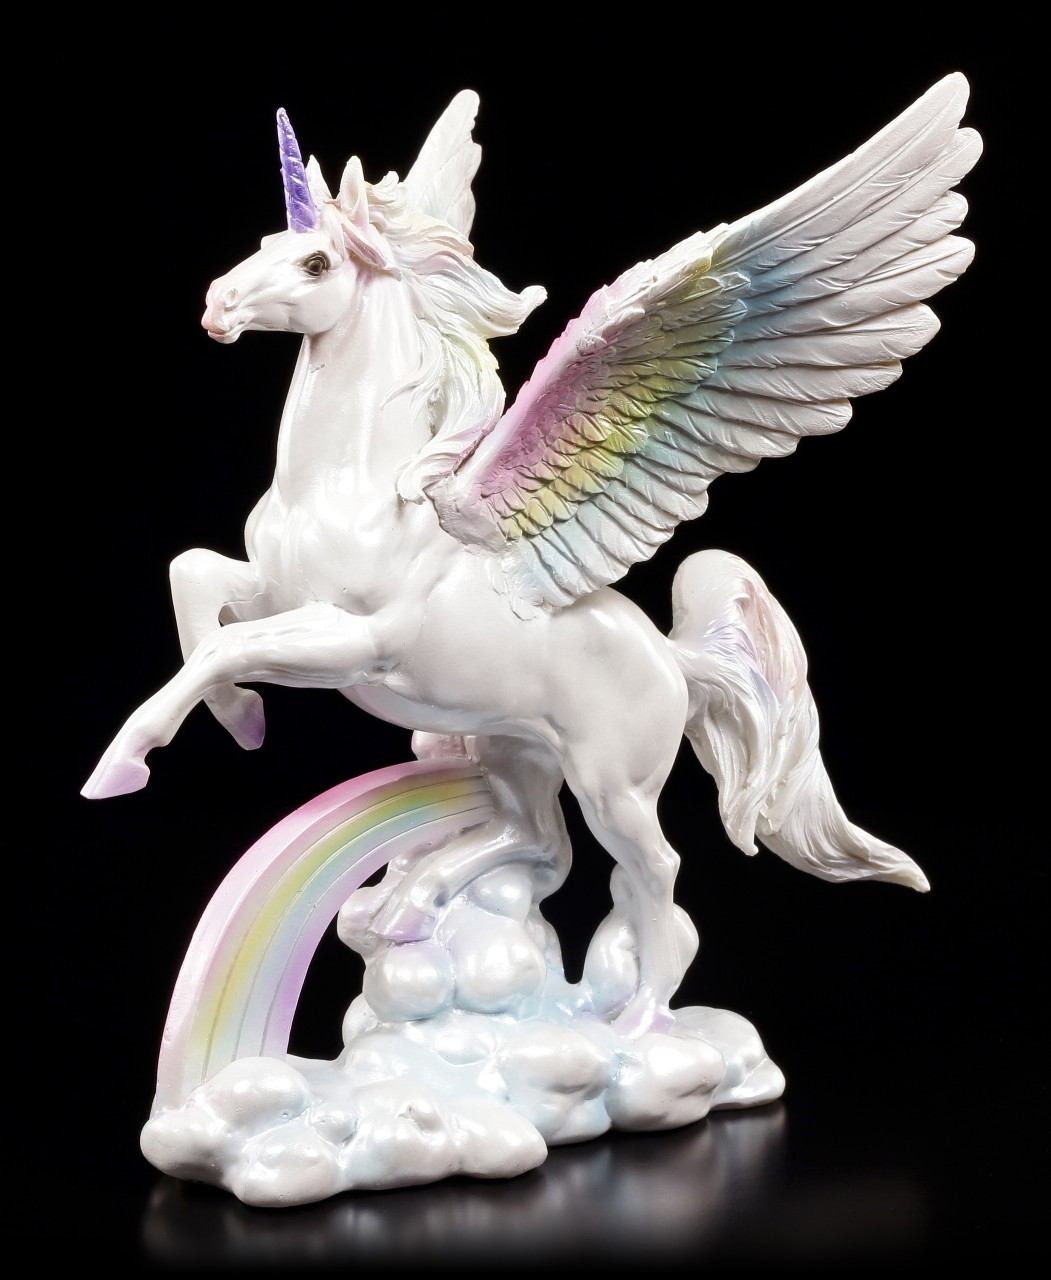 Unicorn Figurine - With Rainbow and Clouds